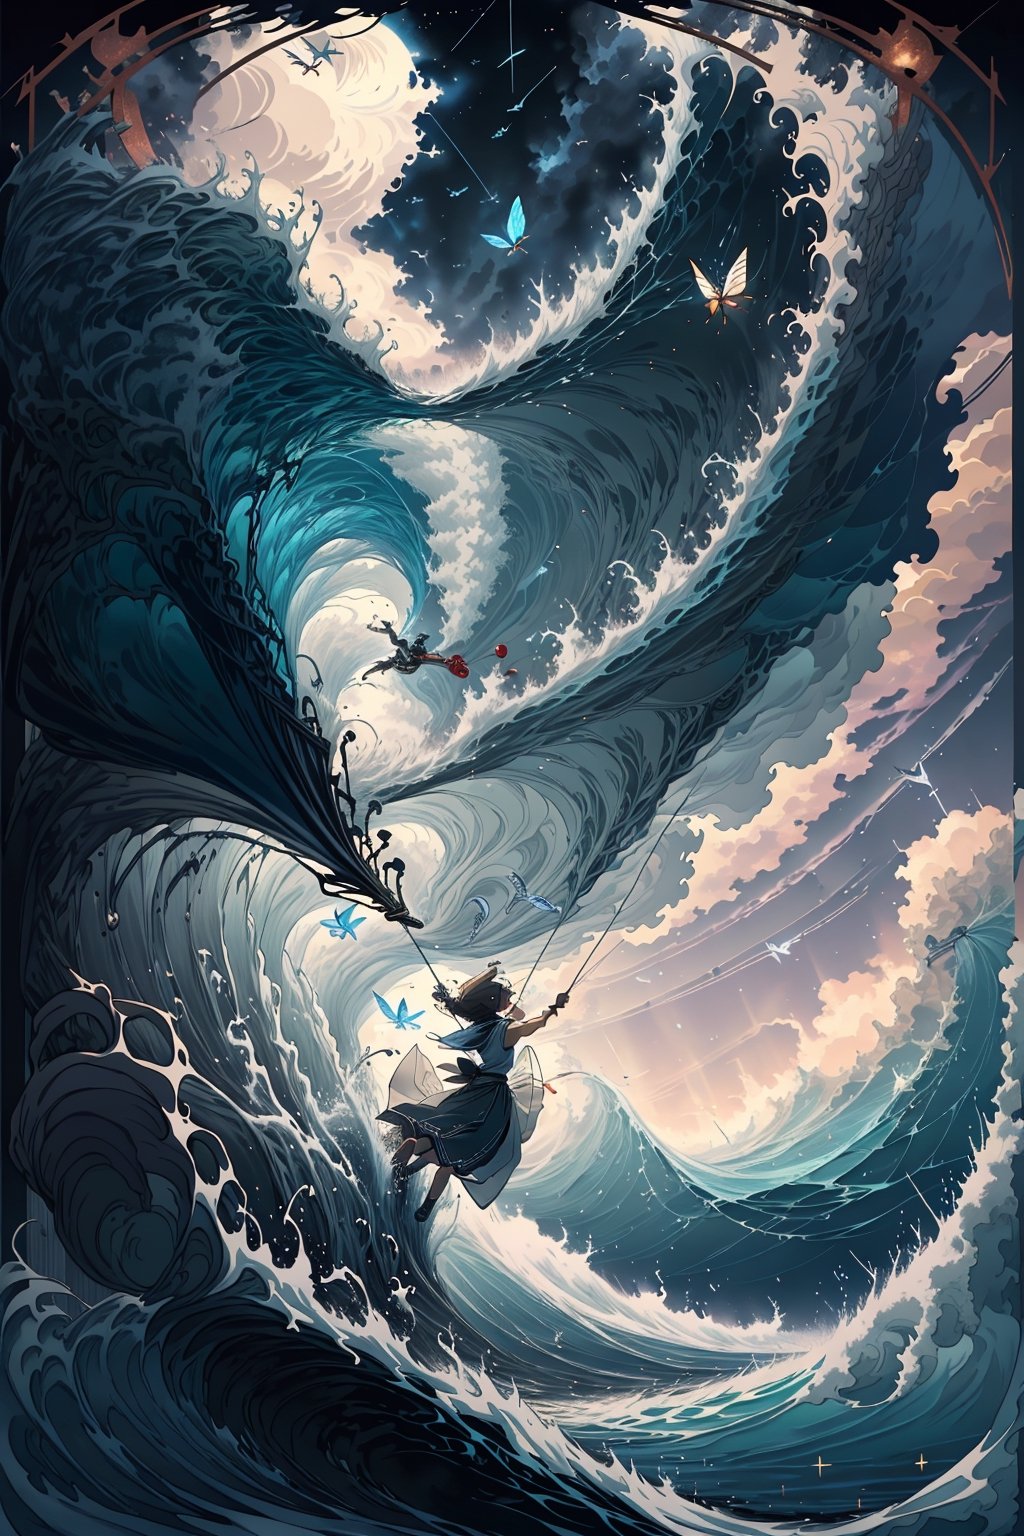 Poster design, tri-fold, Robinson Crusoe, bow deck, sailor, adventure, big waves, lightning, flying bugs